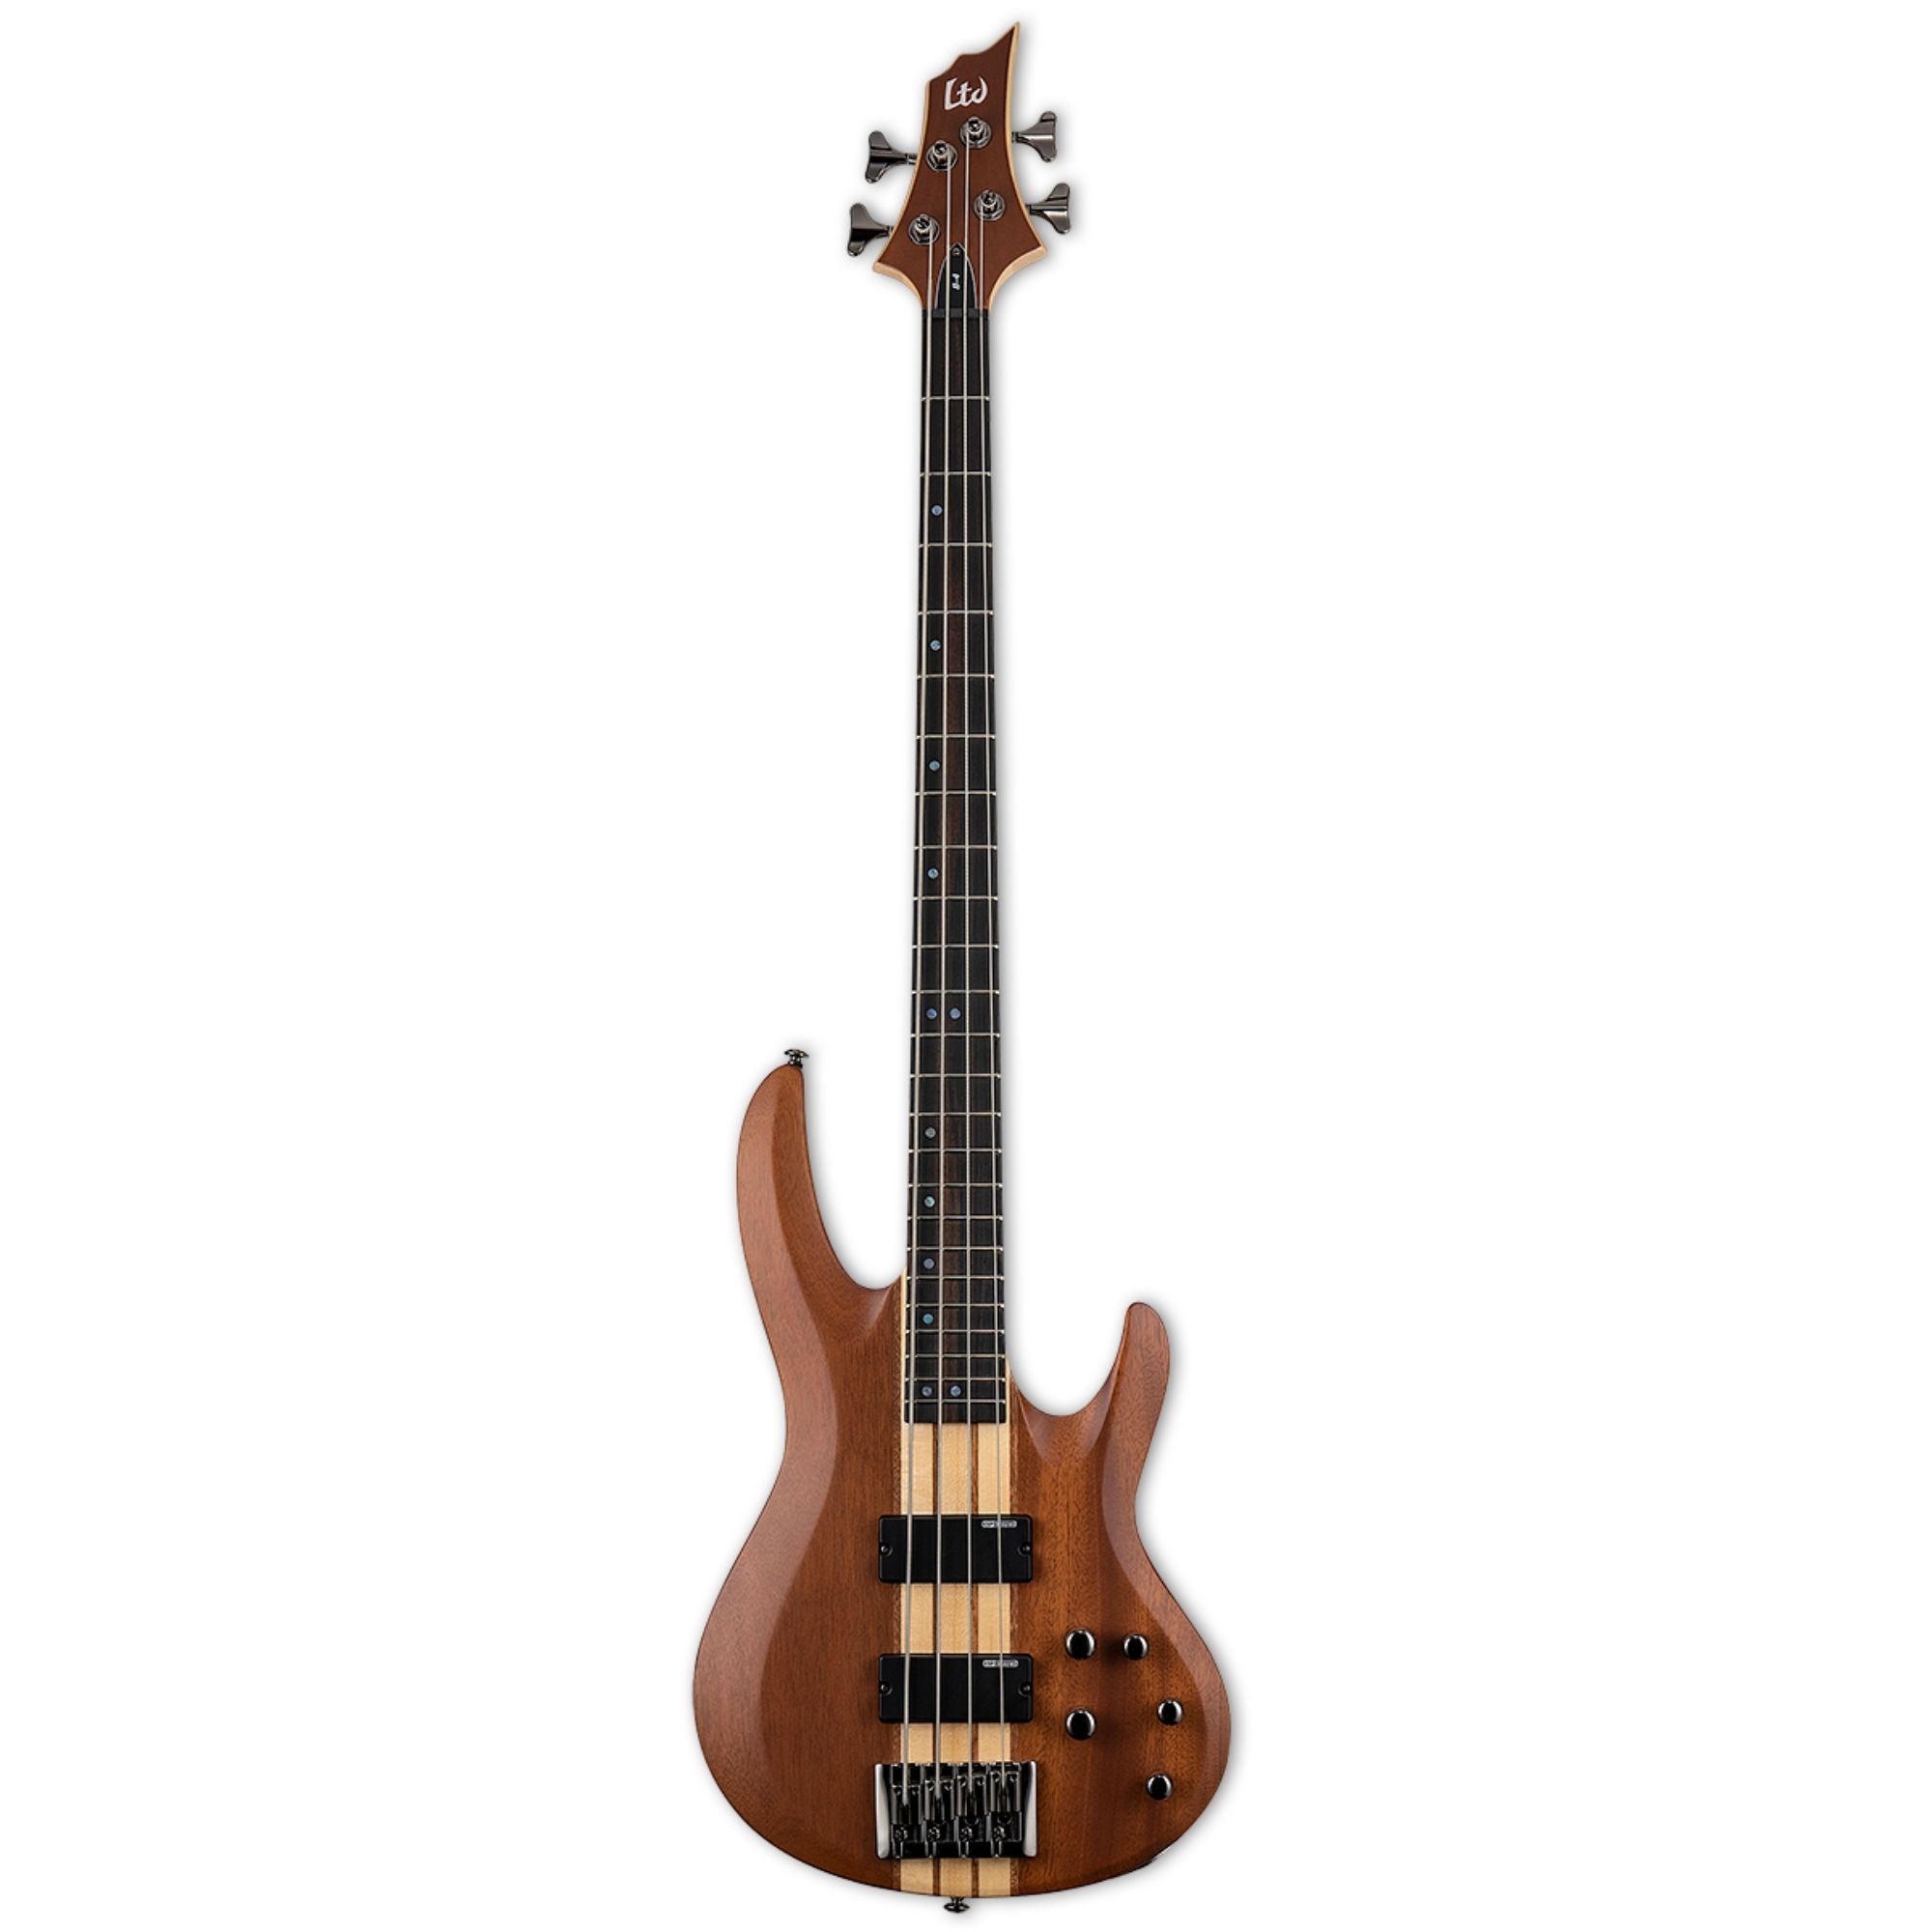 Buy ESP B4E bass guitar online in India